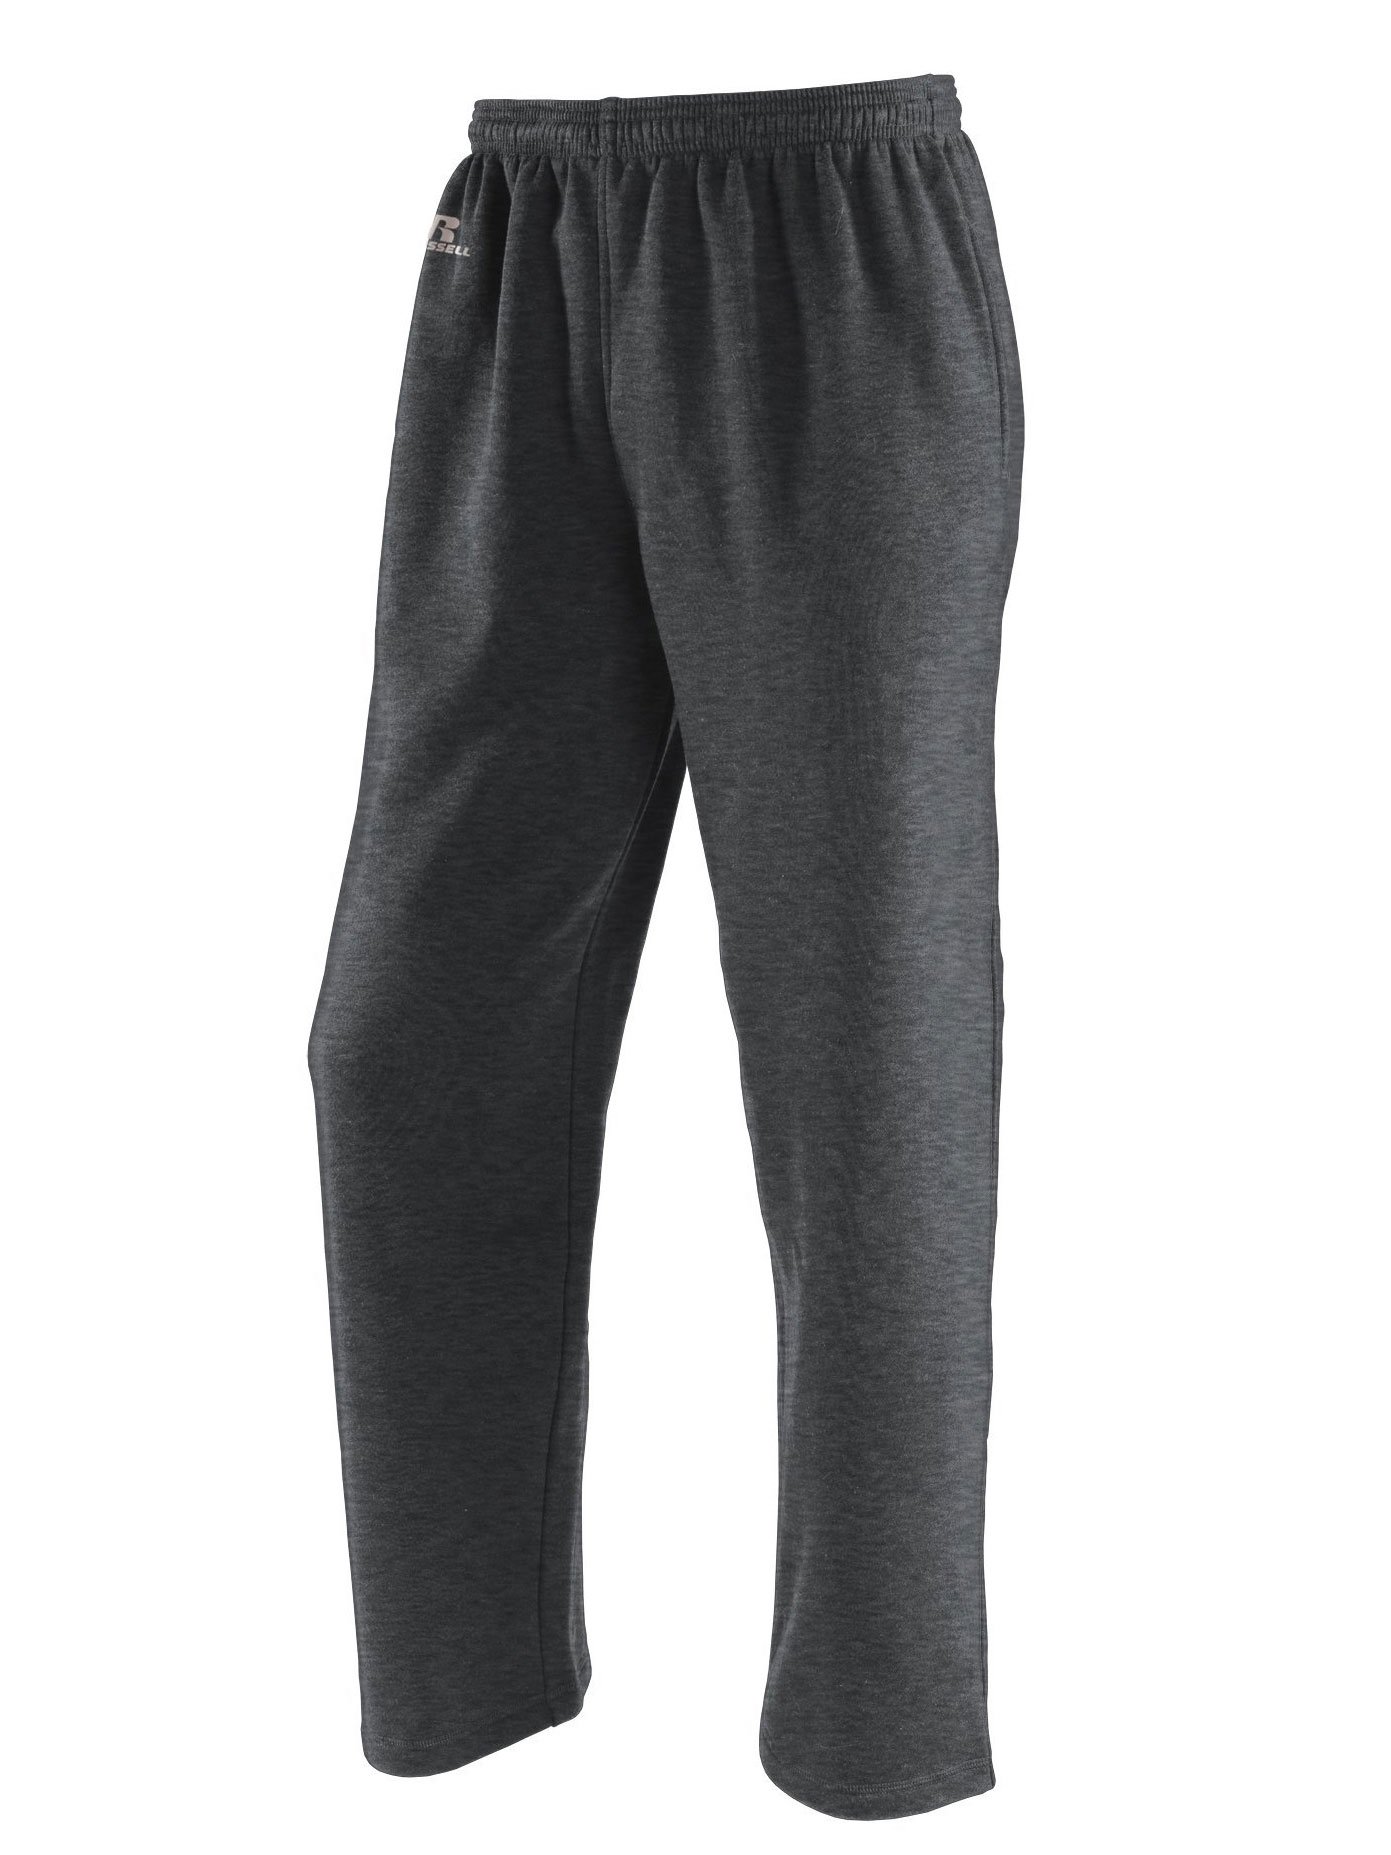 Russell Athletic Boys Dri-Power Fleece Sweatshirts, Hoodies & Sweatpants, Sweatpants-black heather, M